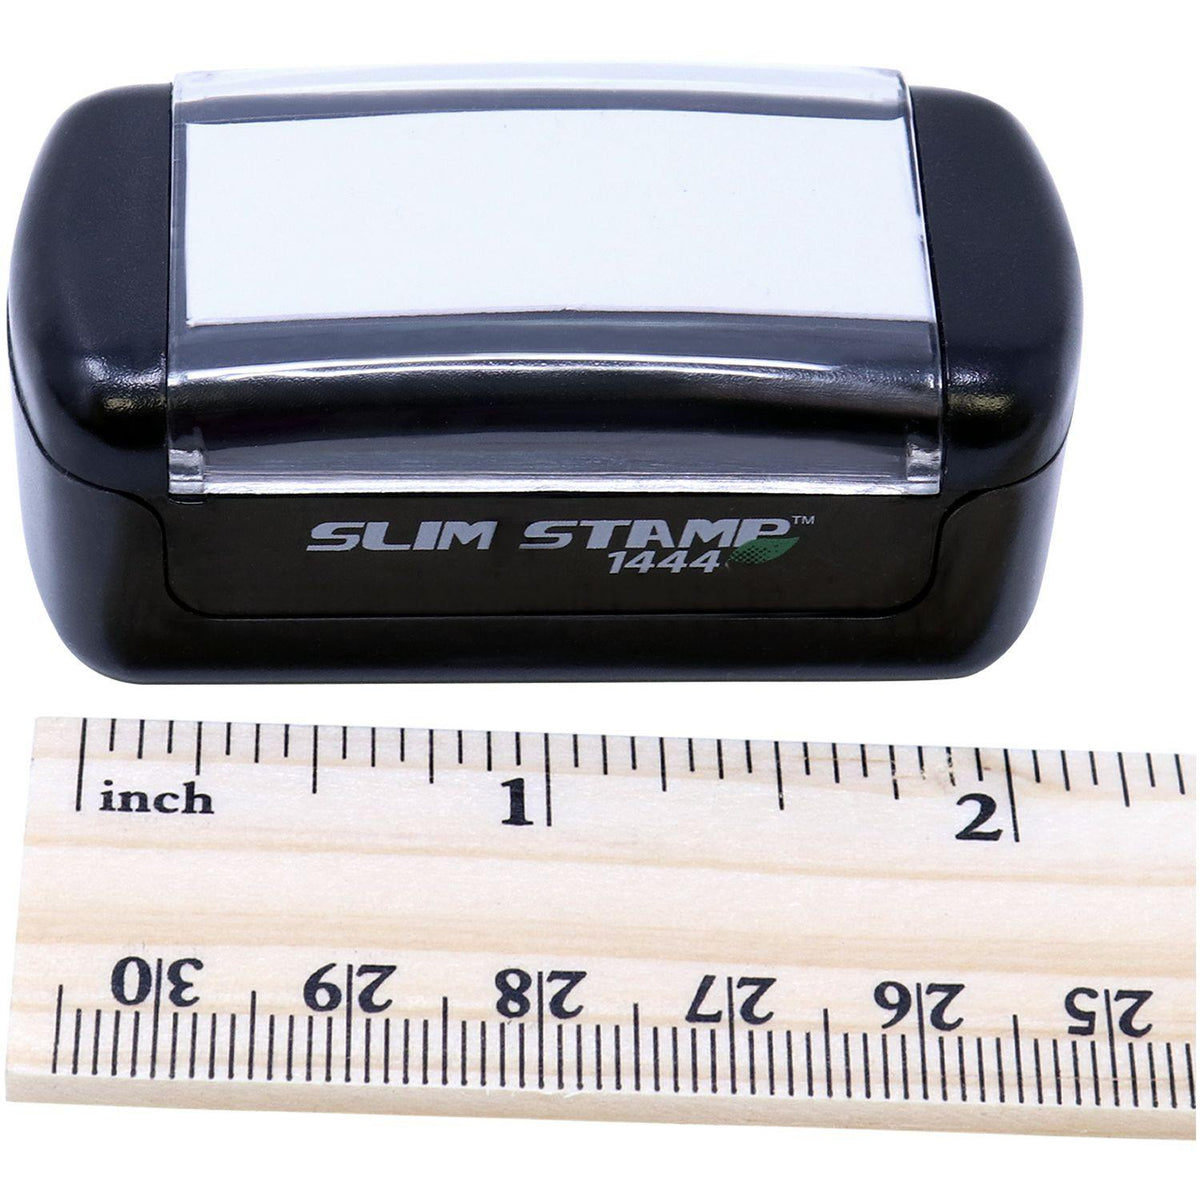 Measurement Slim Pre-Inked Credit Outline Stamp with Ruler